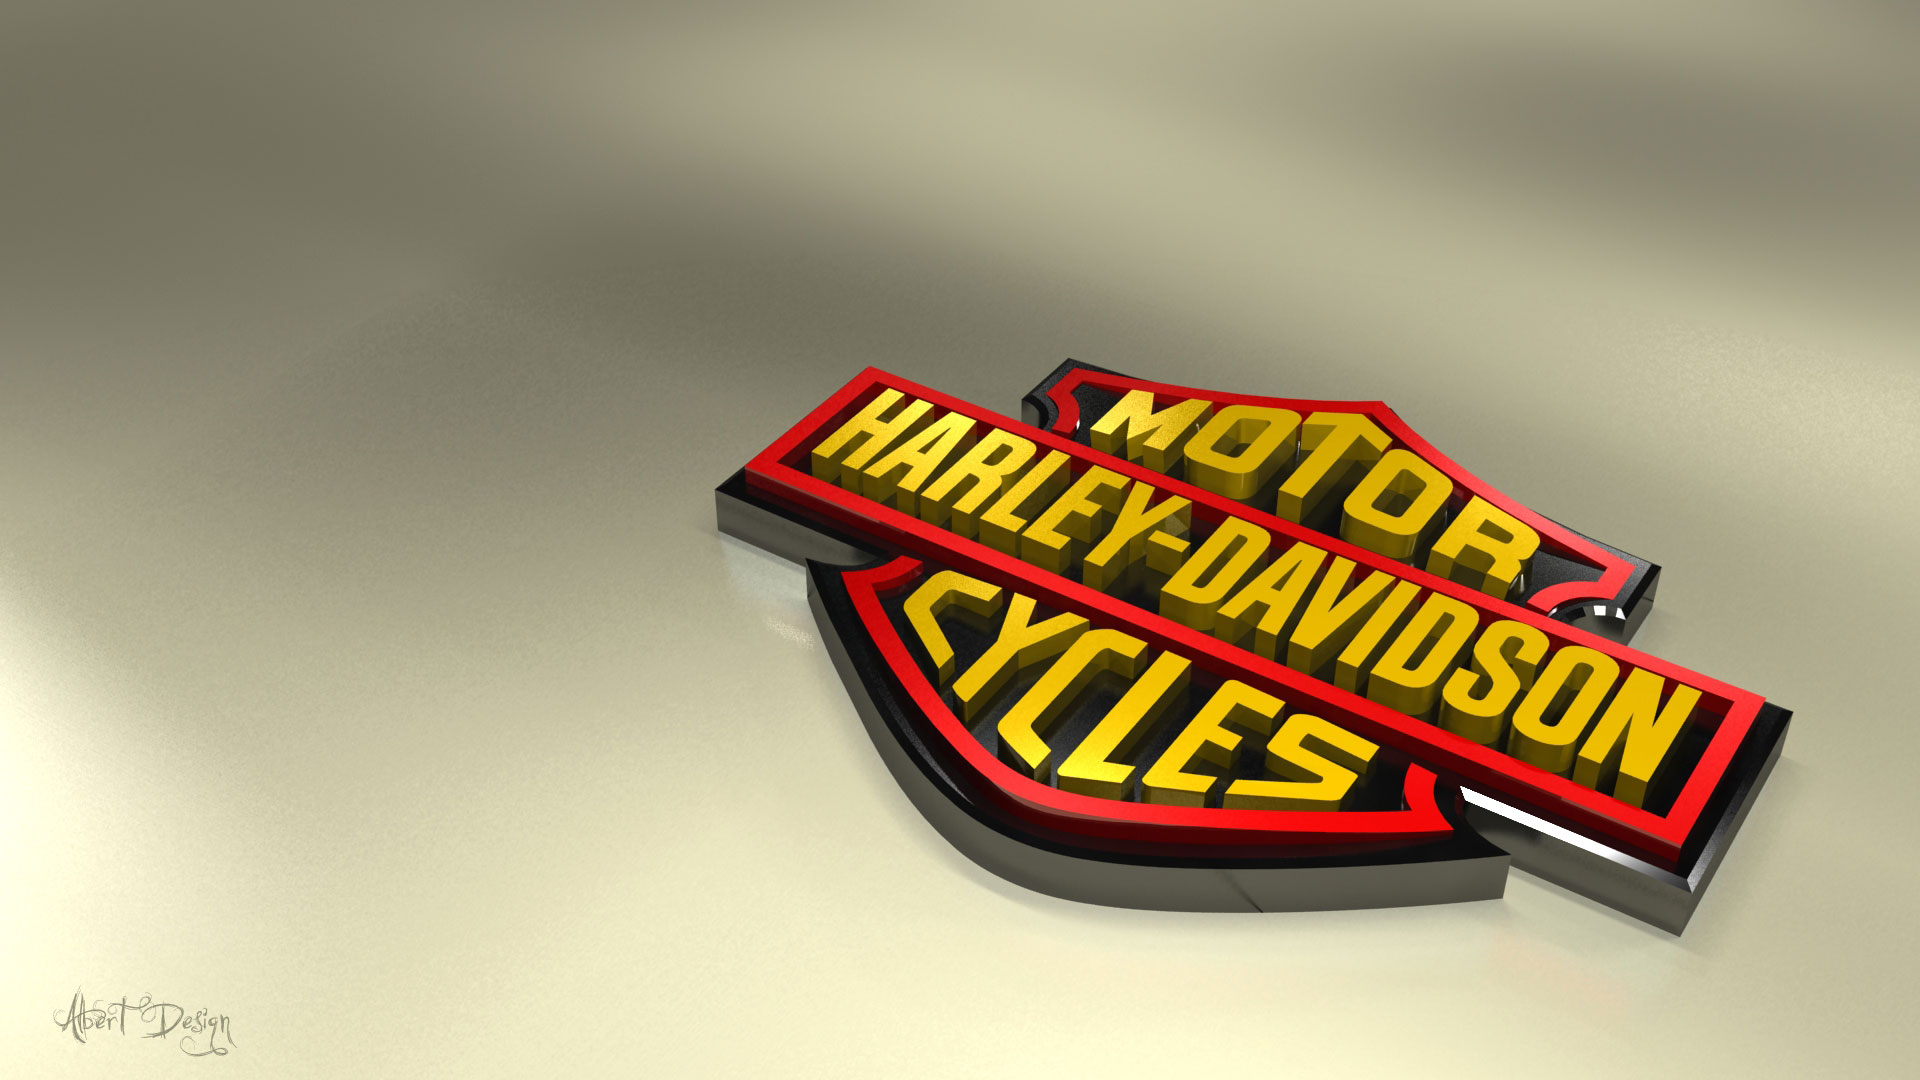 Harley Davidson Logo Wallpaper 7663 Hd Wallpapers in Logos   Imagesci